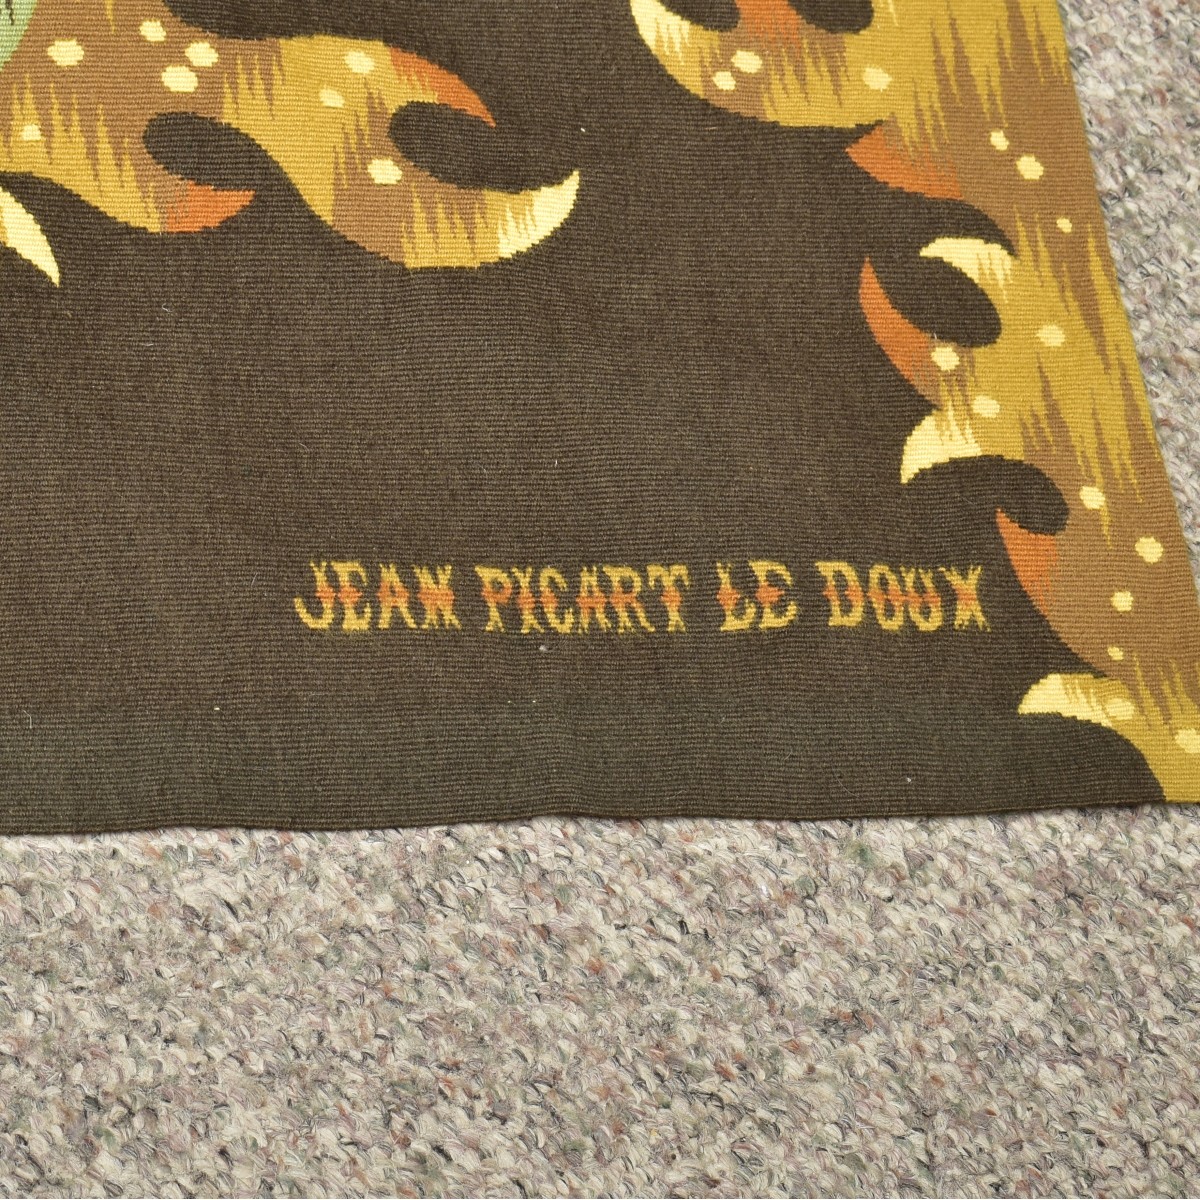 Jean Picart Le Doux, French (1902 - 1982)